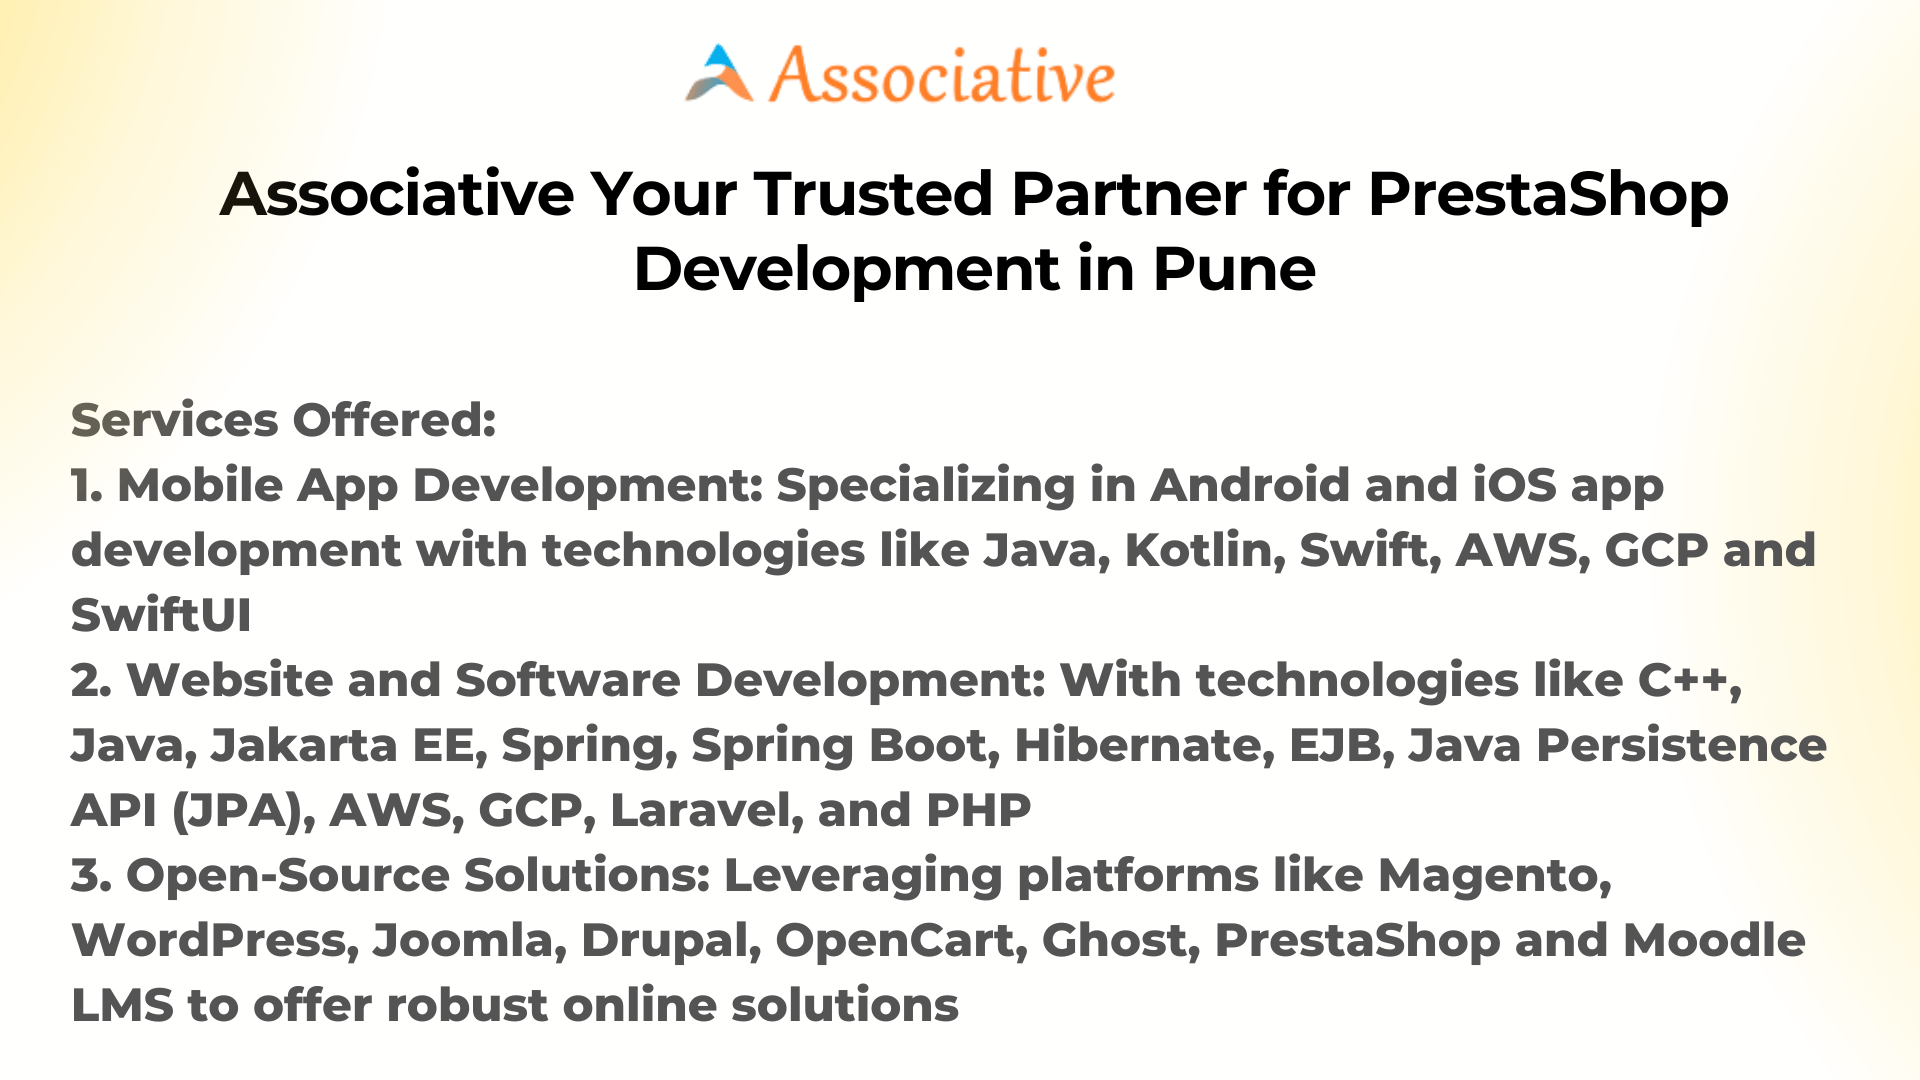 Associative Your Trusted Partner for PrestaShop Development in Pune